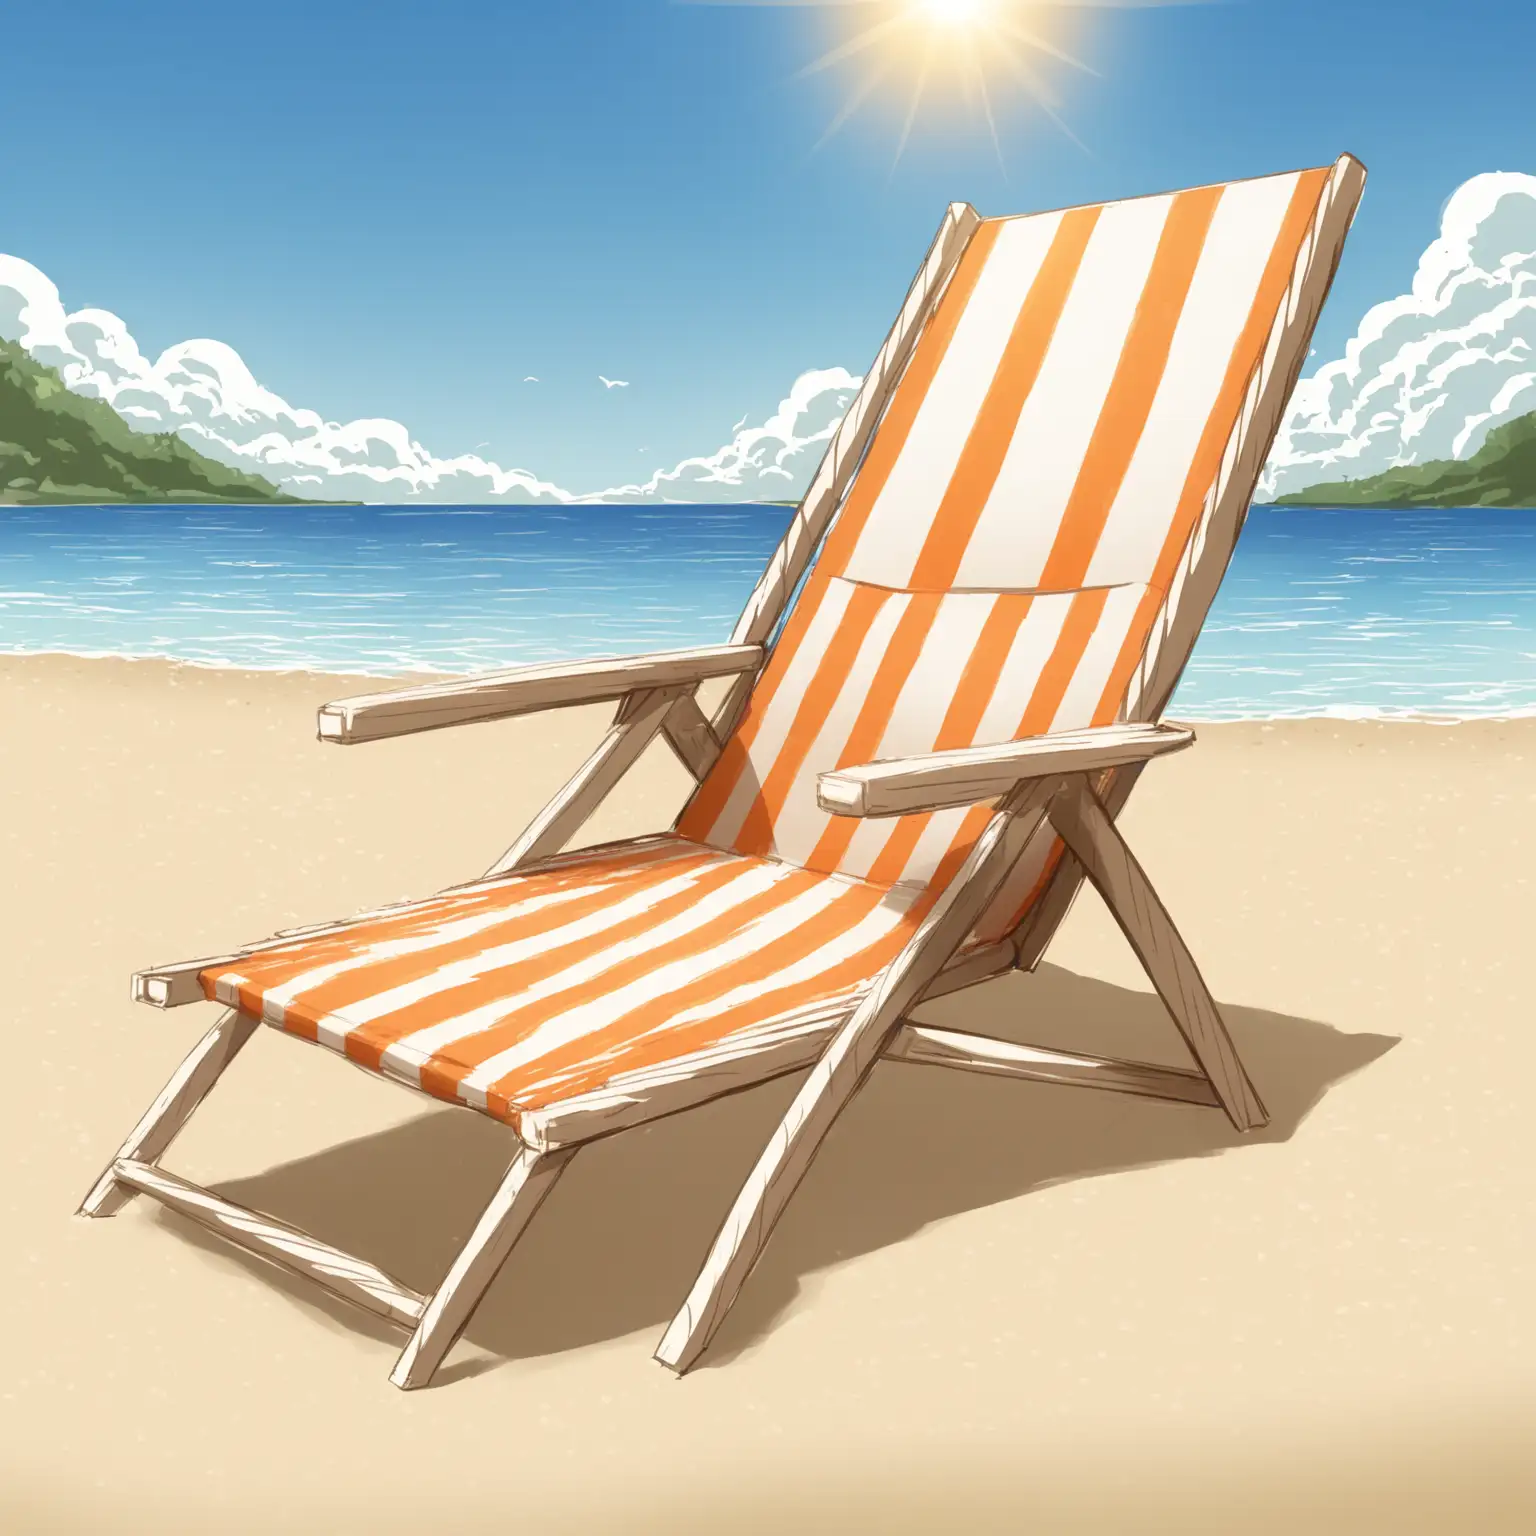 Sunlit Beach Scene with Womans Legs and Beach Chair